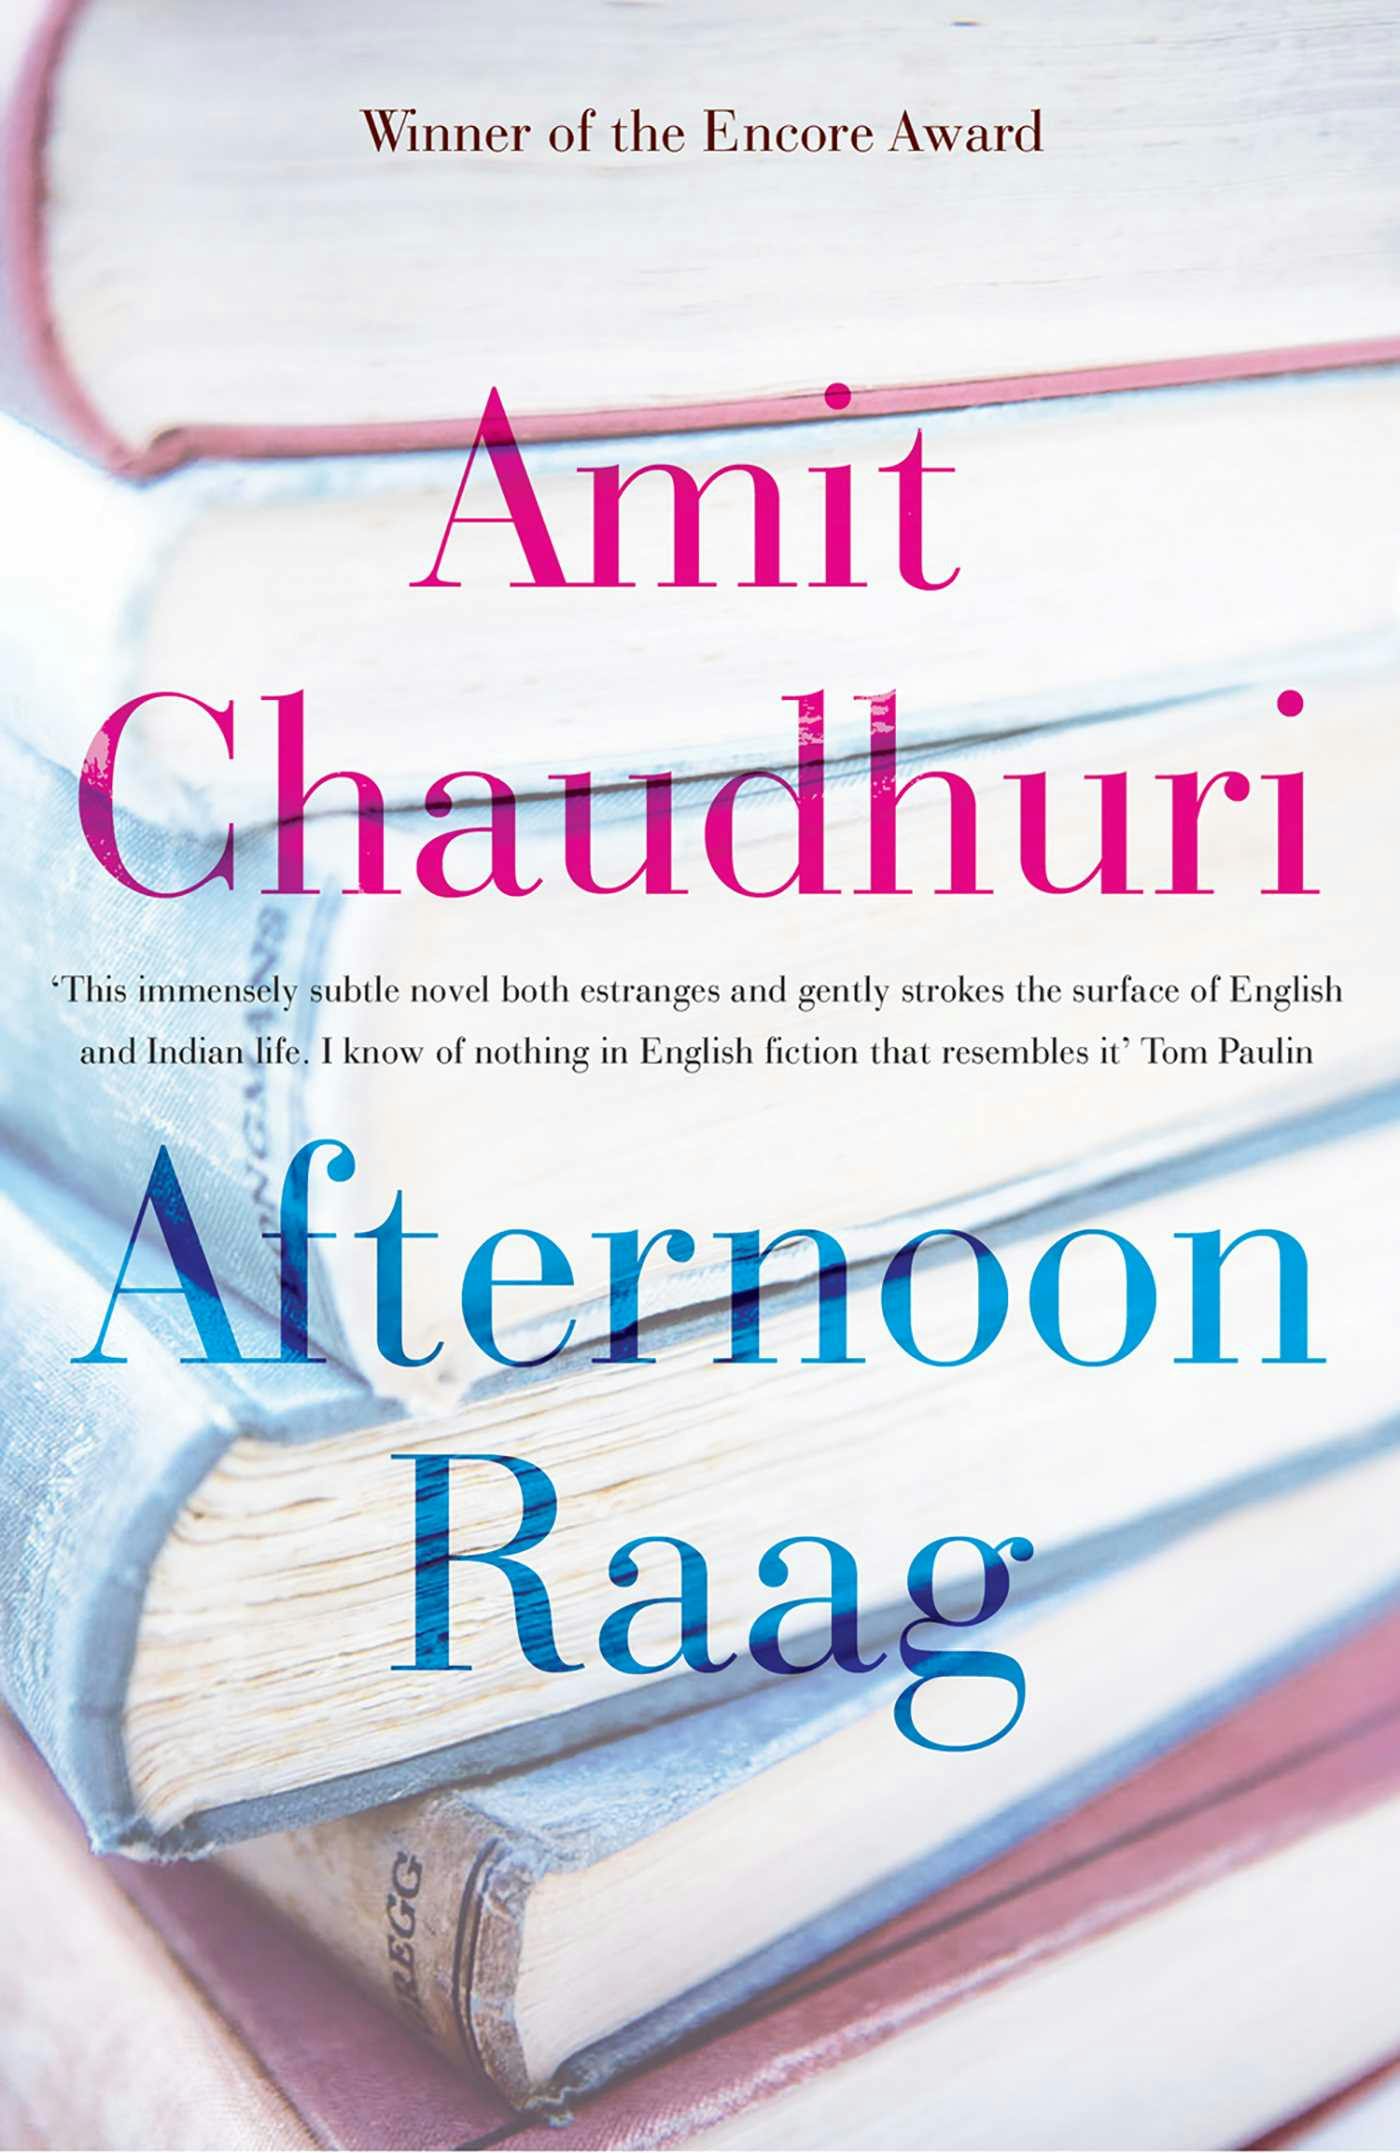 Afternoon Raag - Amit Chaudhuri